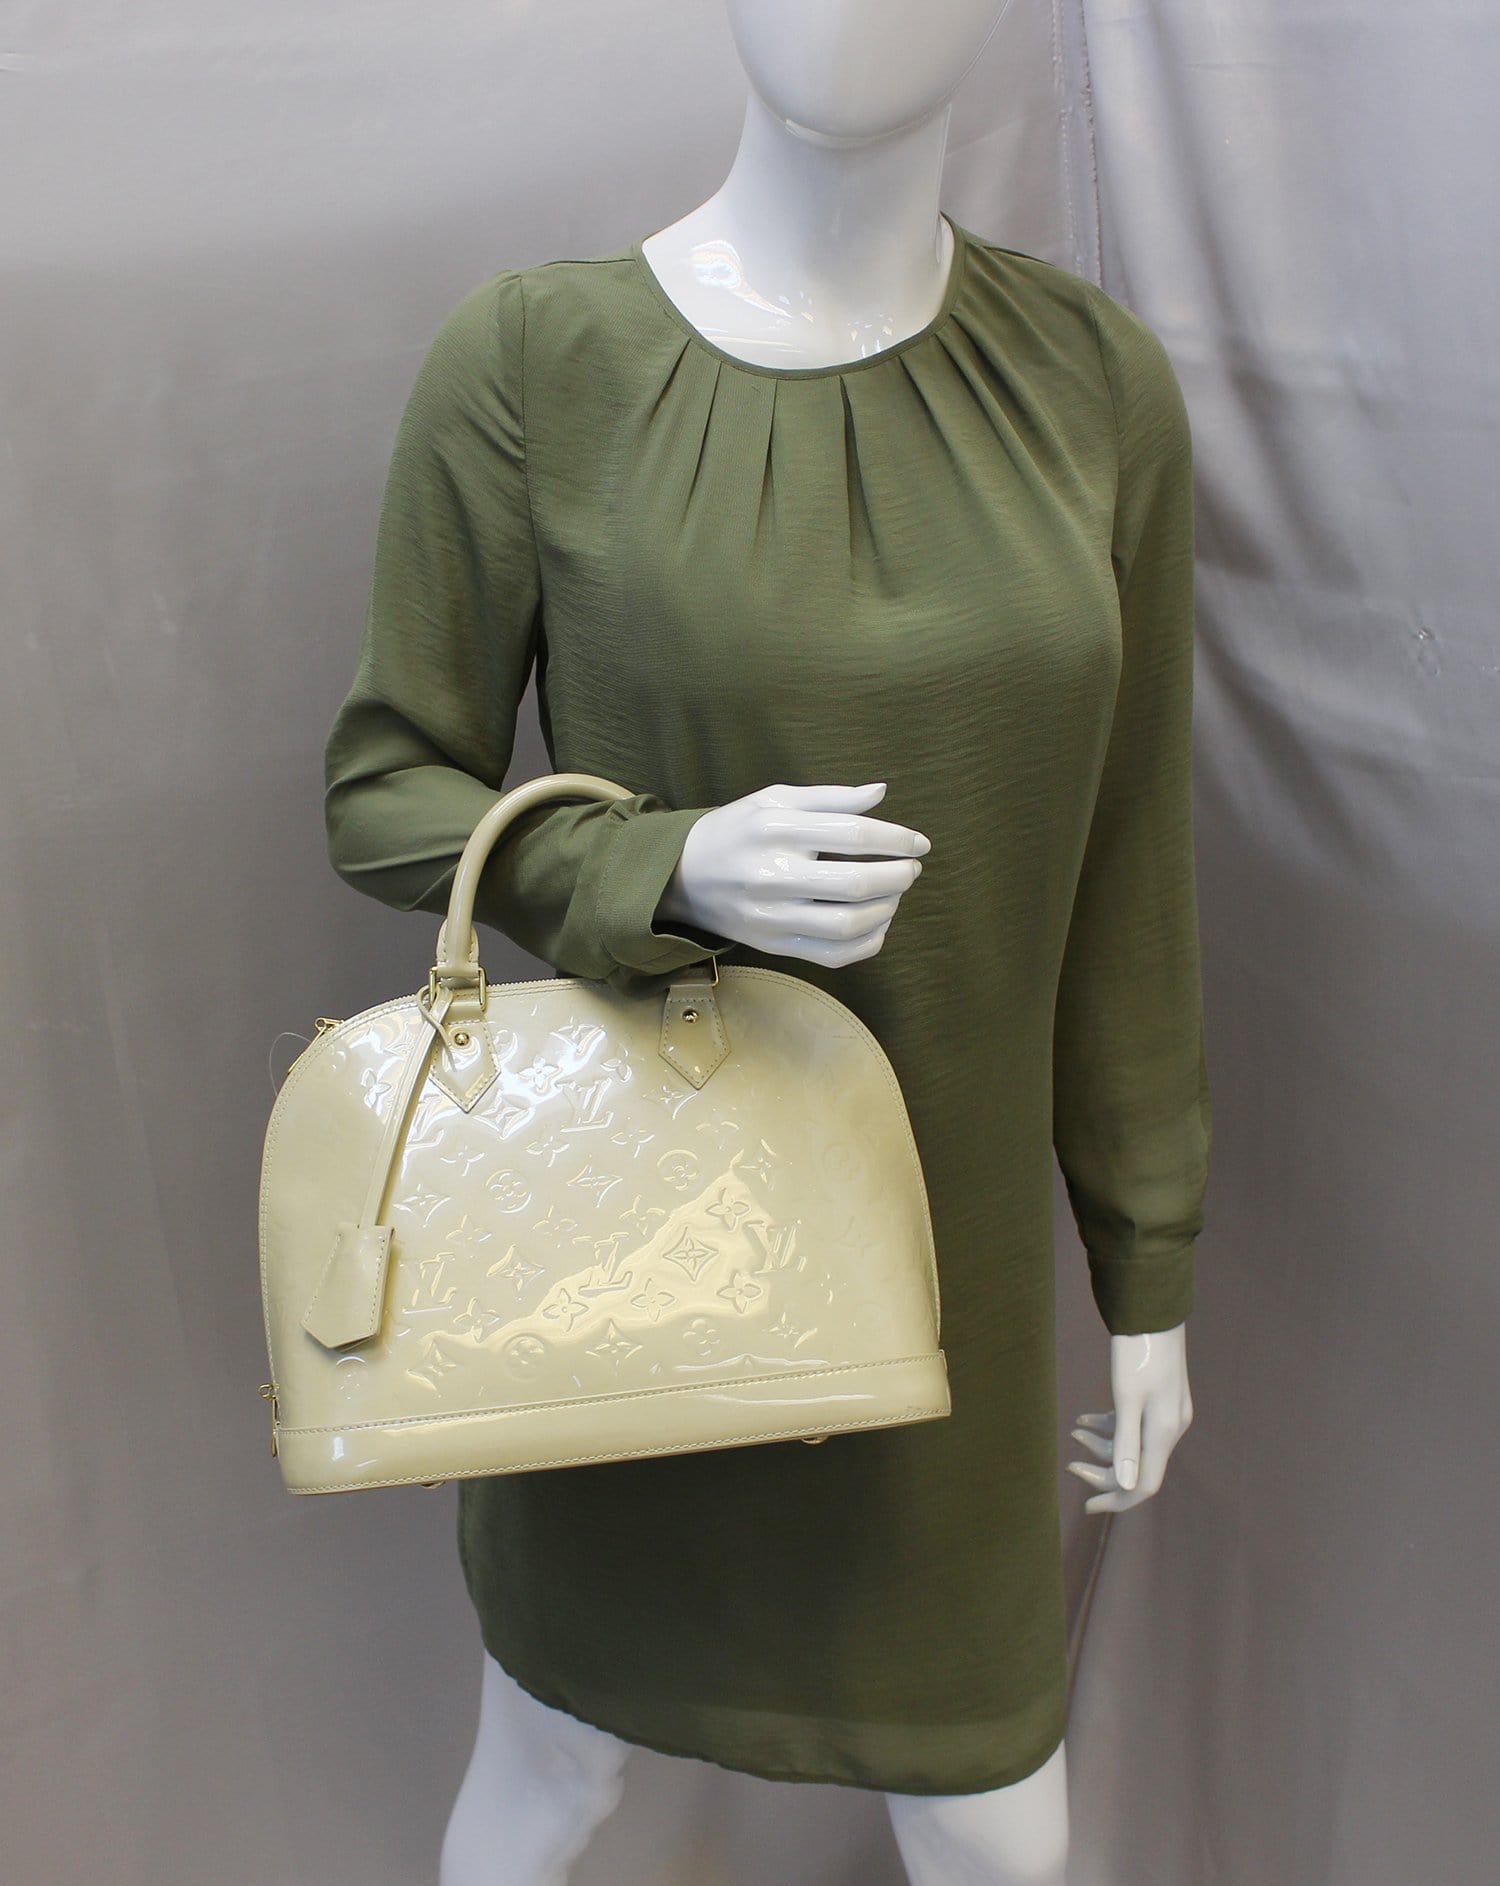 Louis Vuitton - Authenticated Alma Bb Handbag - Leather White Plain for Women, Never Worn